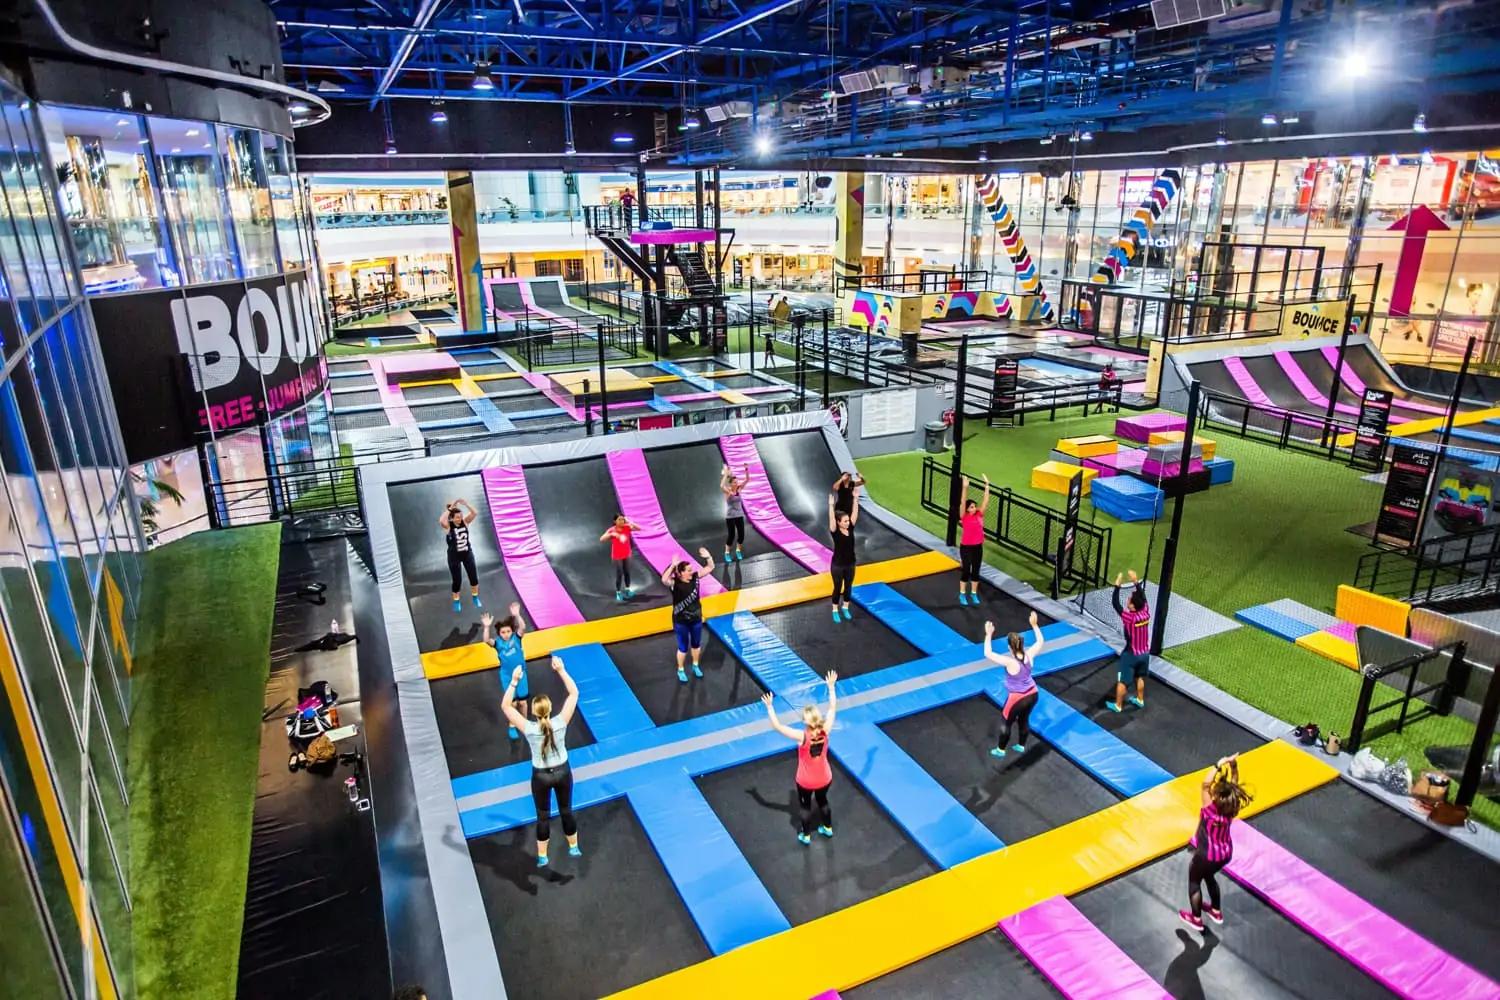 The Bounce Indoor trampoline park in Dubai